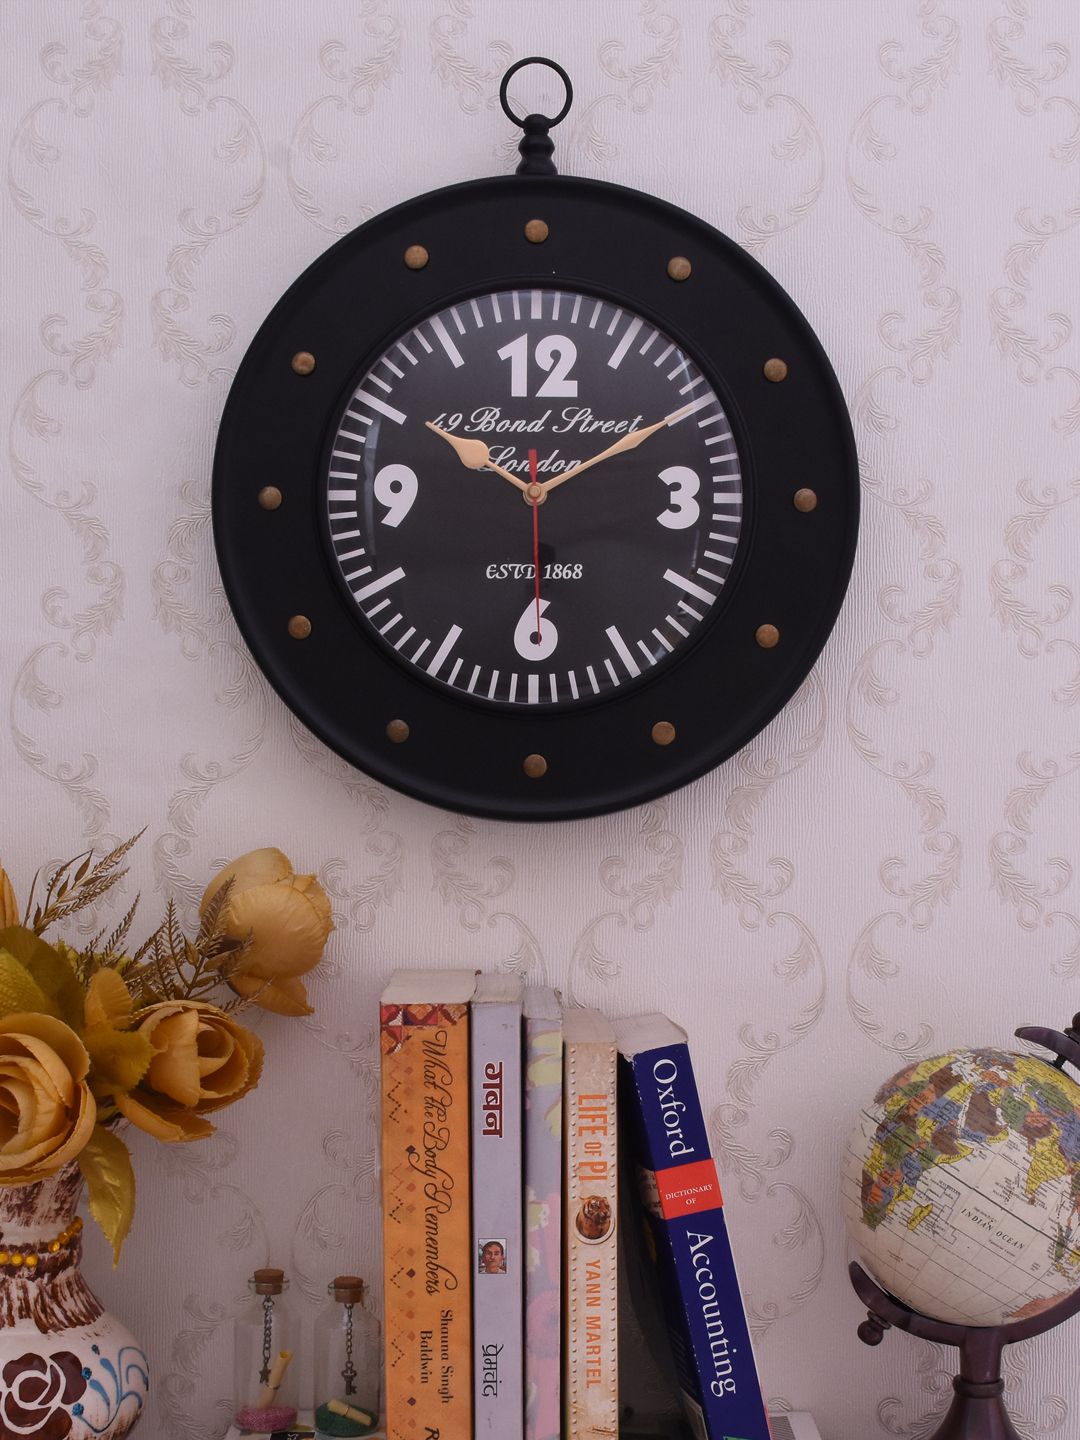     			Home Sparkle Circular Analog Wall Clock For Décor/Gifting ( 5 x 35 cm )